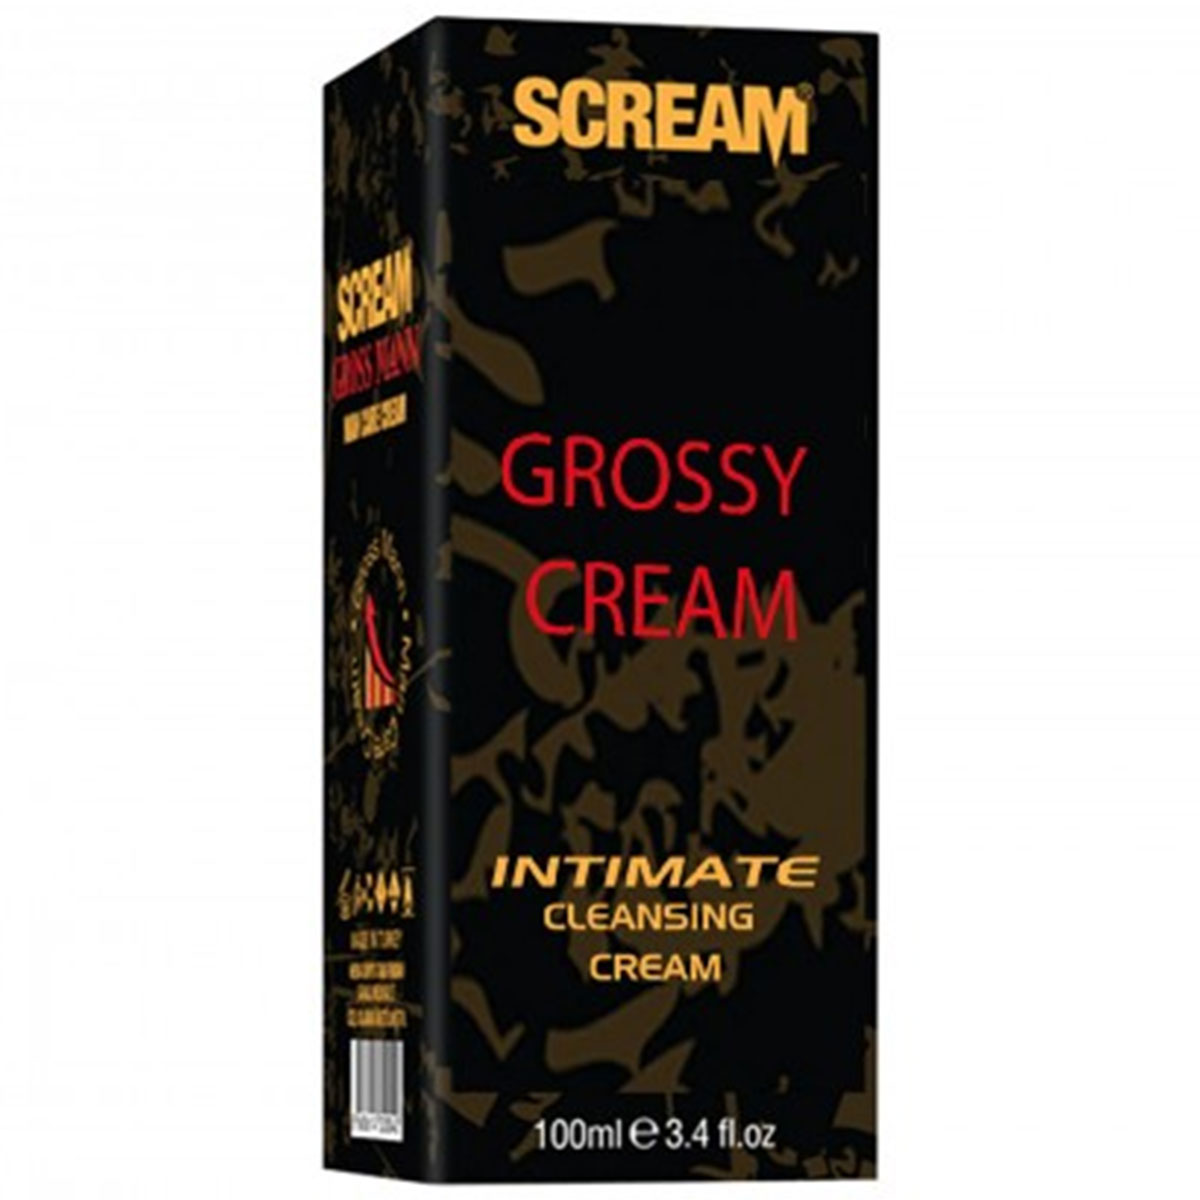 Scream Grossy Cream For Man C-1505